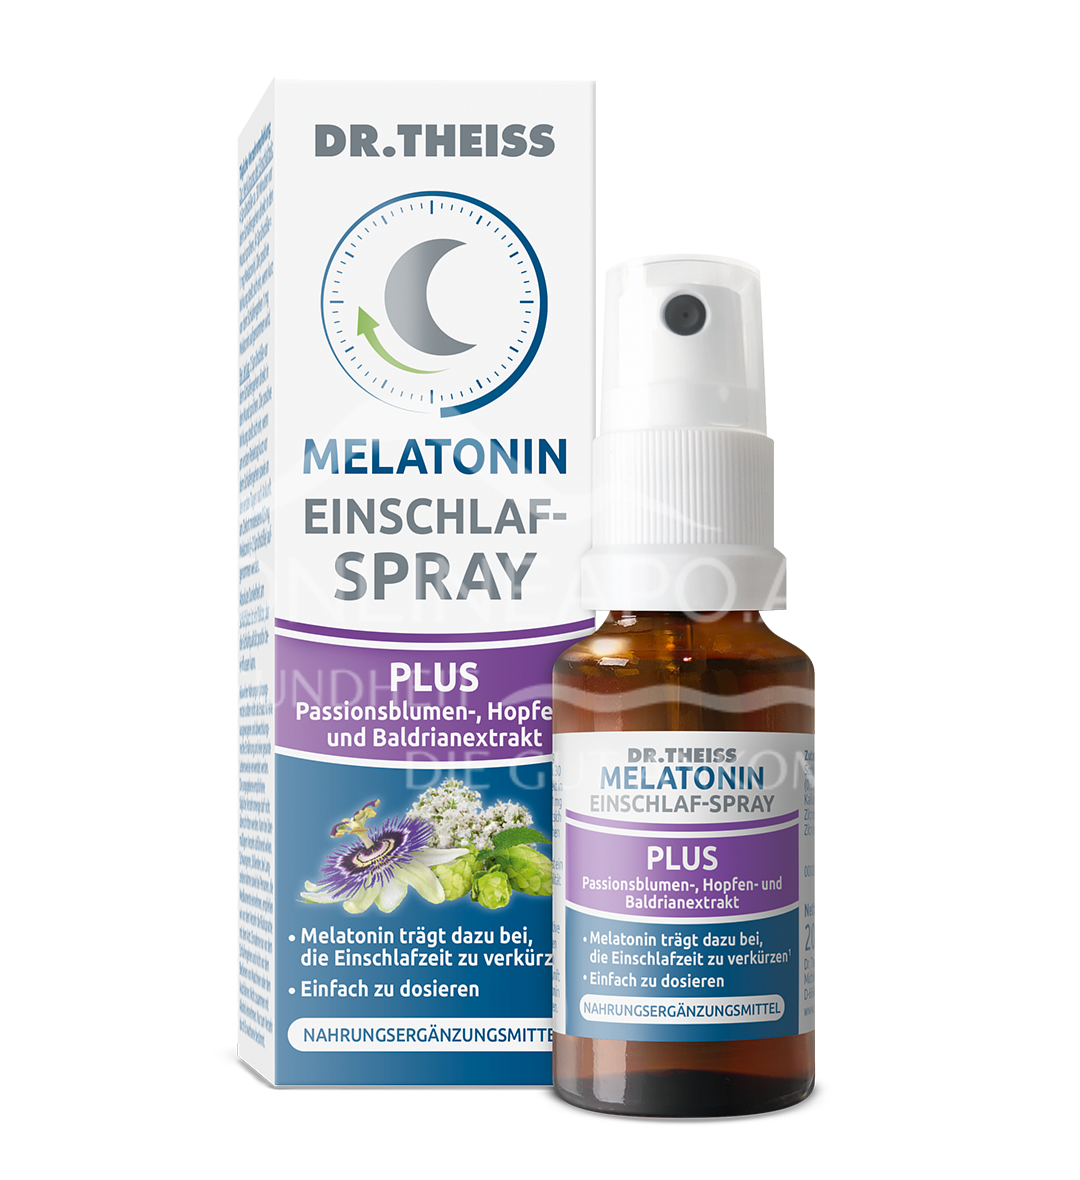 DR. THEISS Melatonin Einschlaf-Spray Plus*